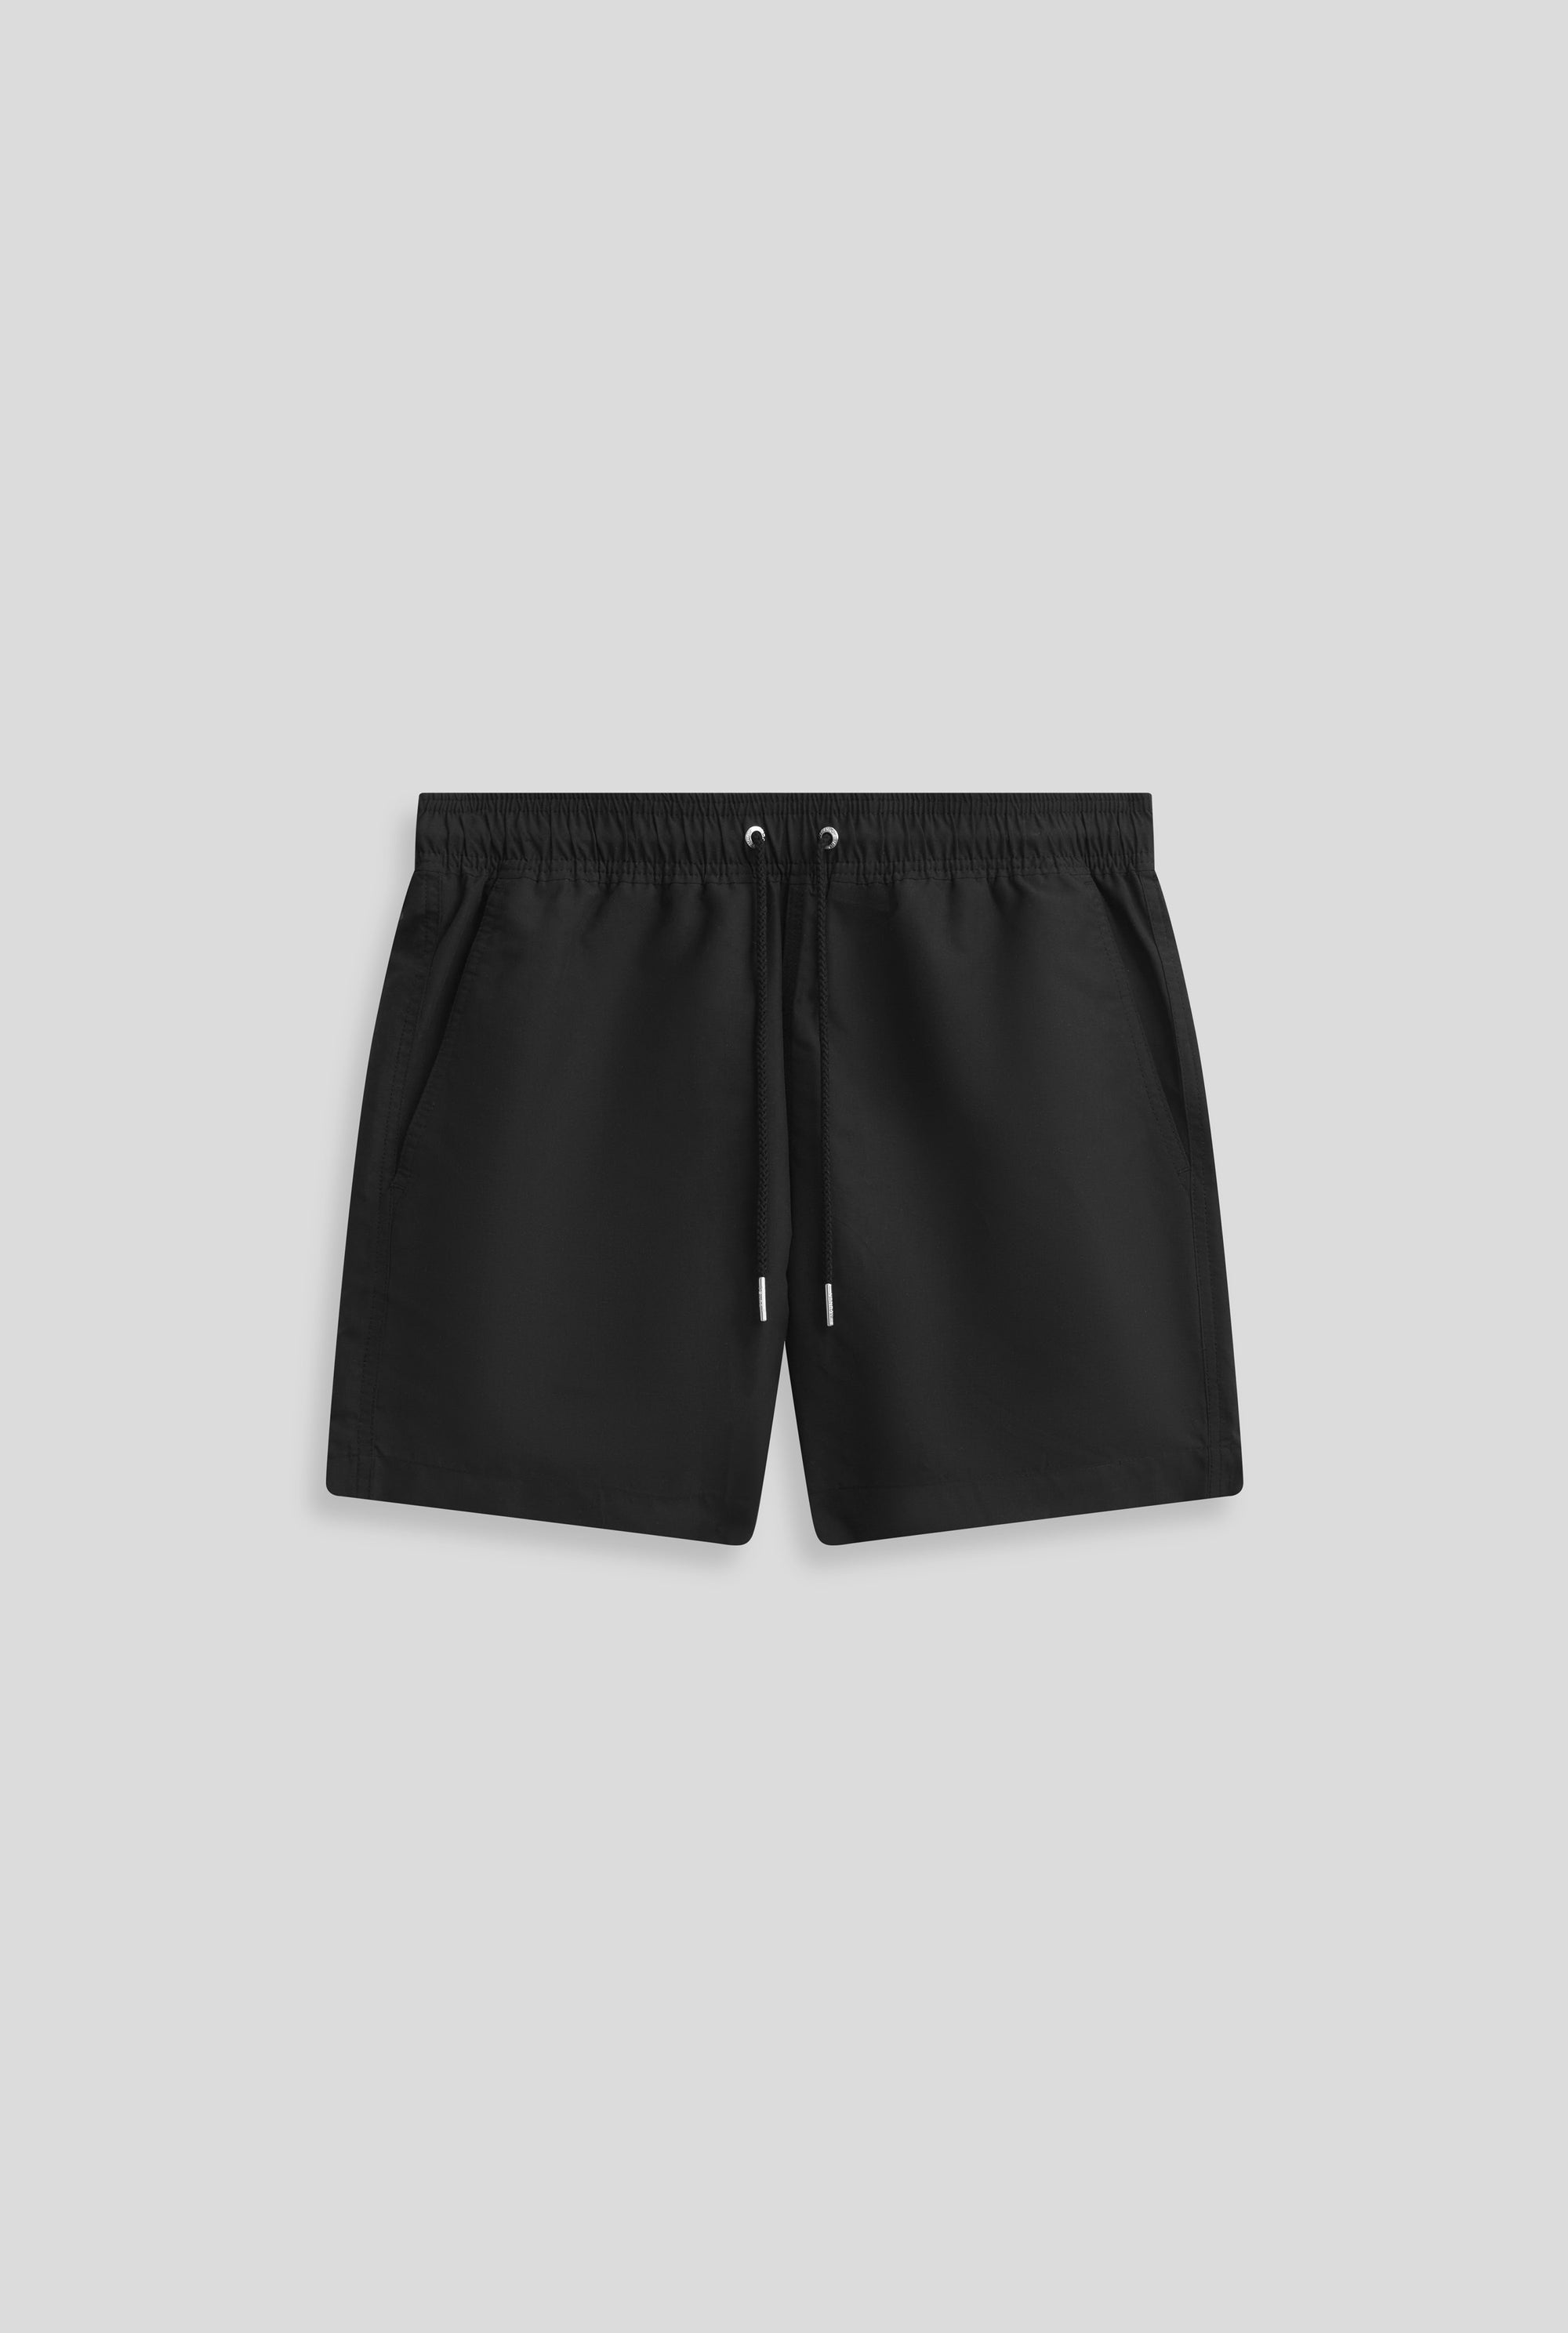 Venroy - Mens Solid Swim Short in Black | Venroy | Premium Leisurewear ...